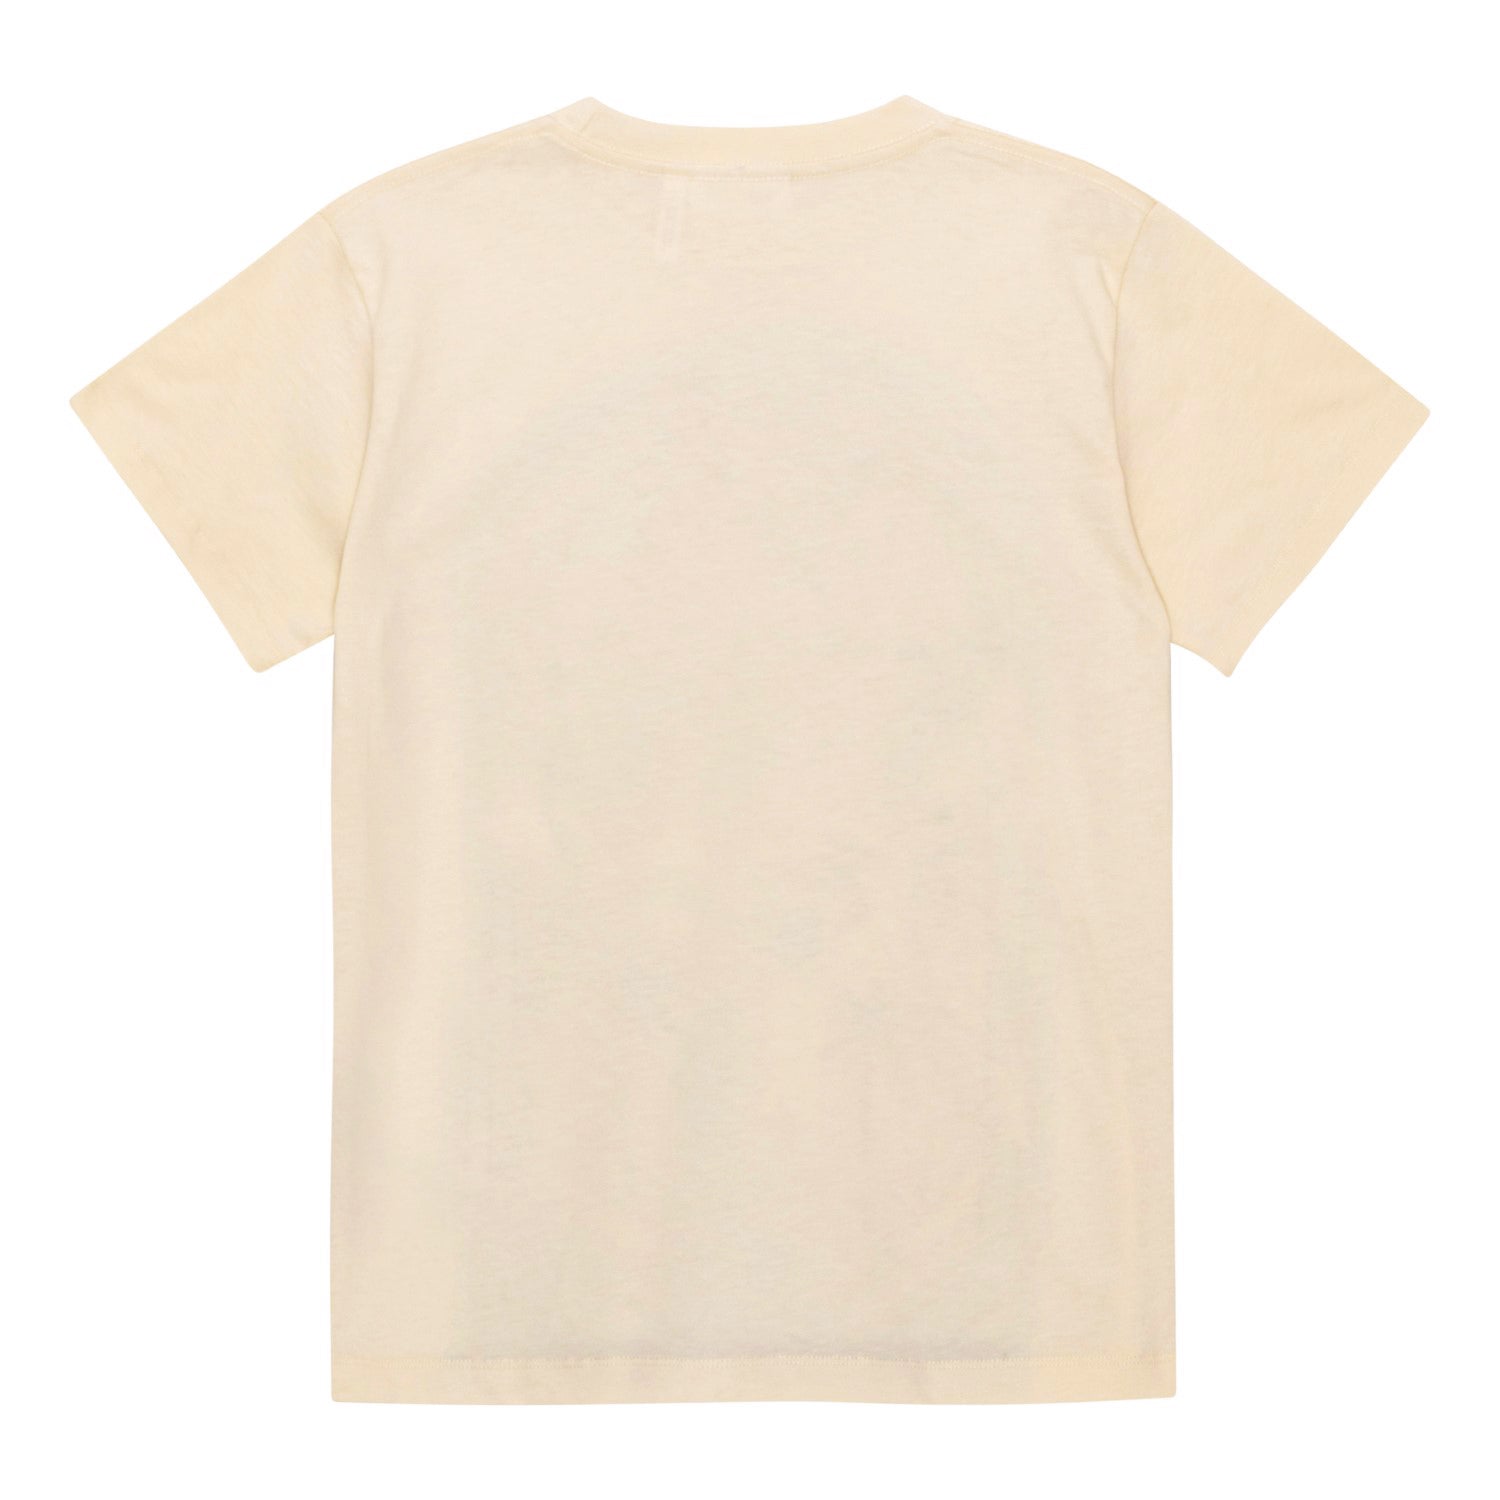 Molo Riley Short Sleeves T-Shirts - Pinball light